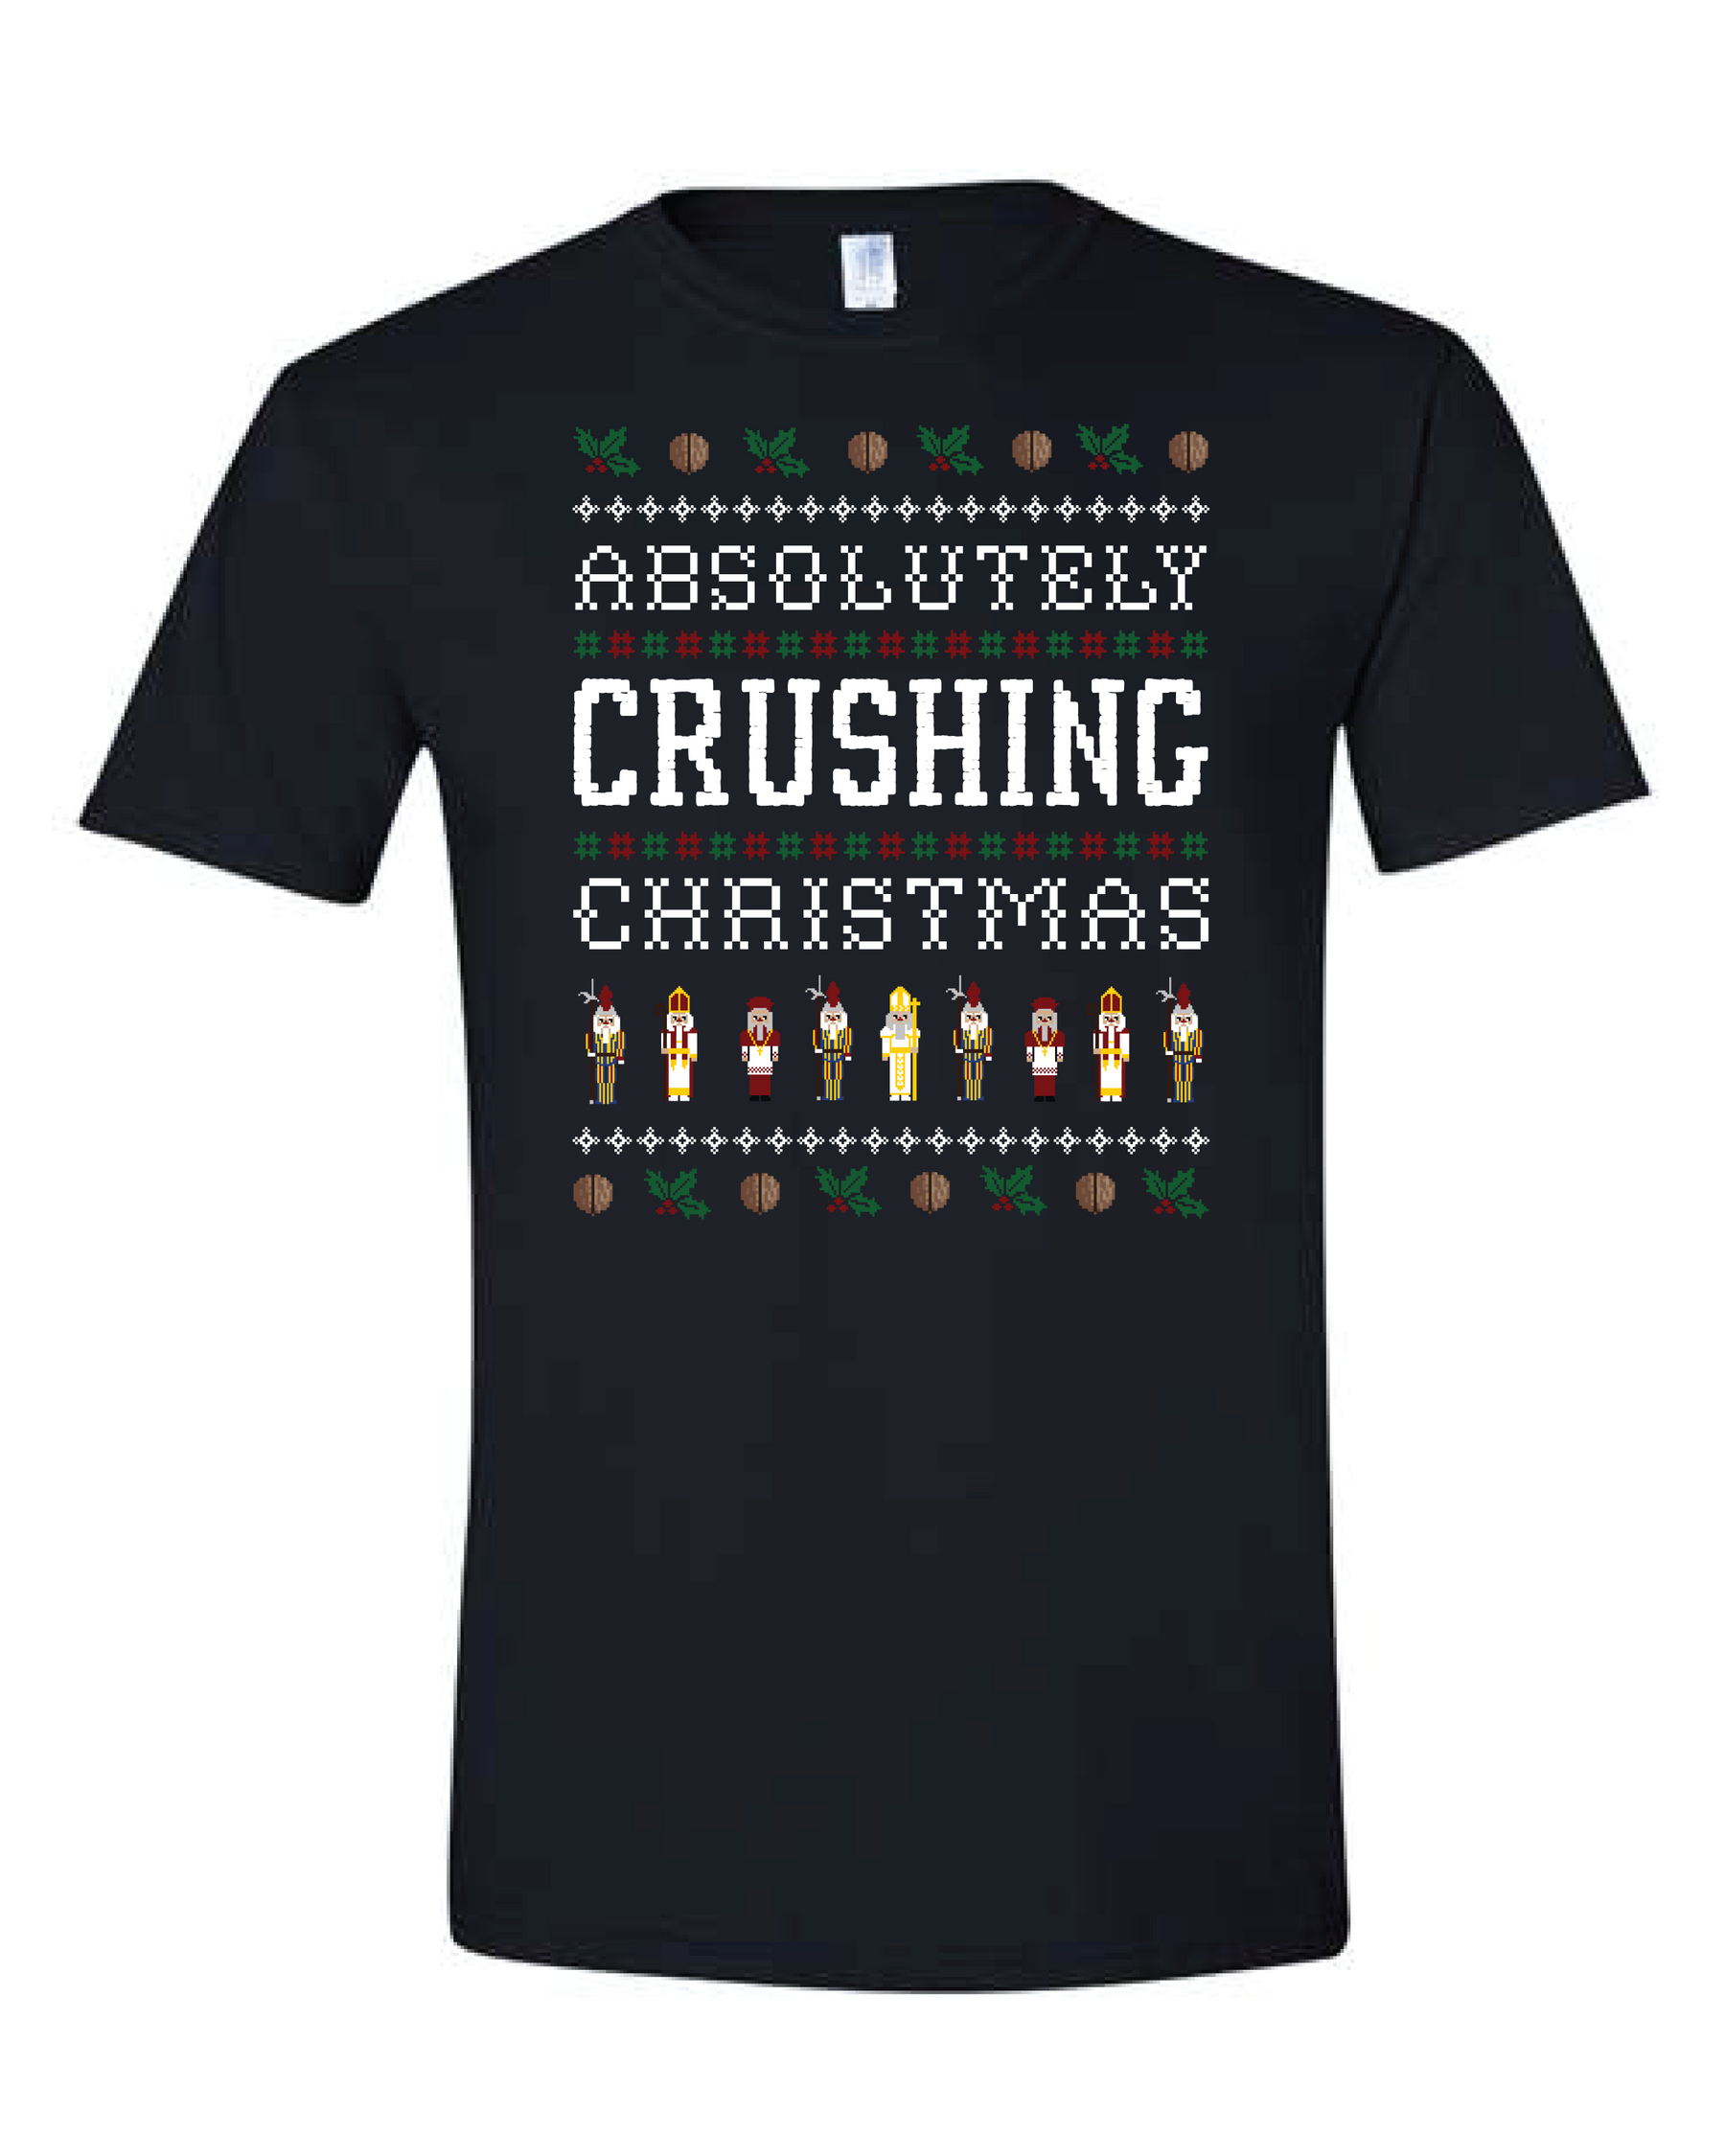 Absolutely Crushing Christmas T Shirt